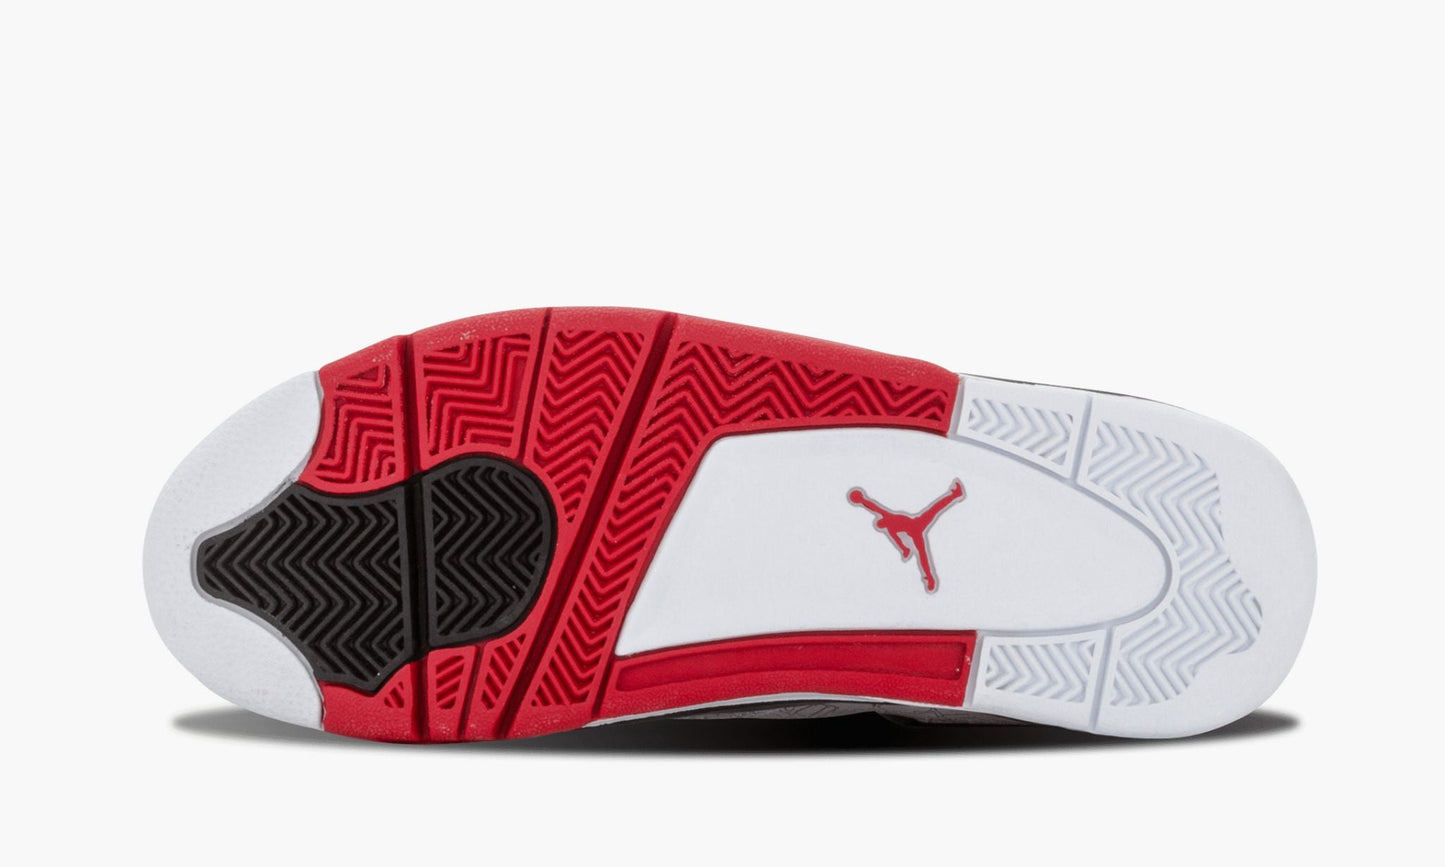 Air Jordan 4 Retro "Laser"